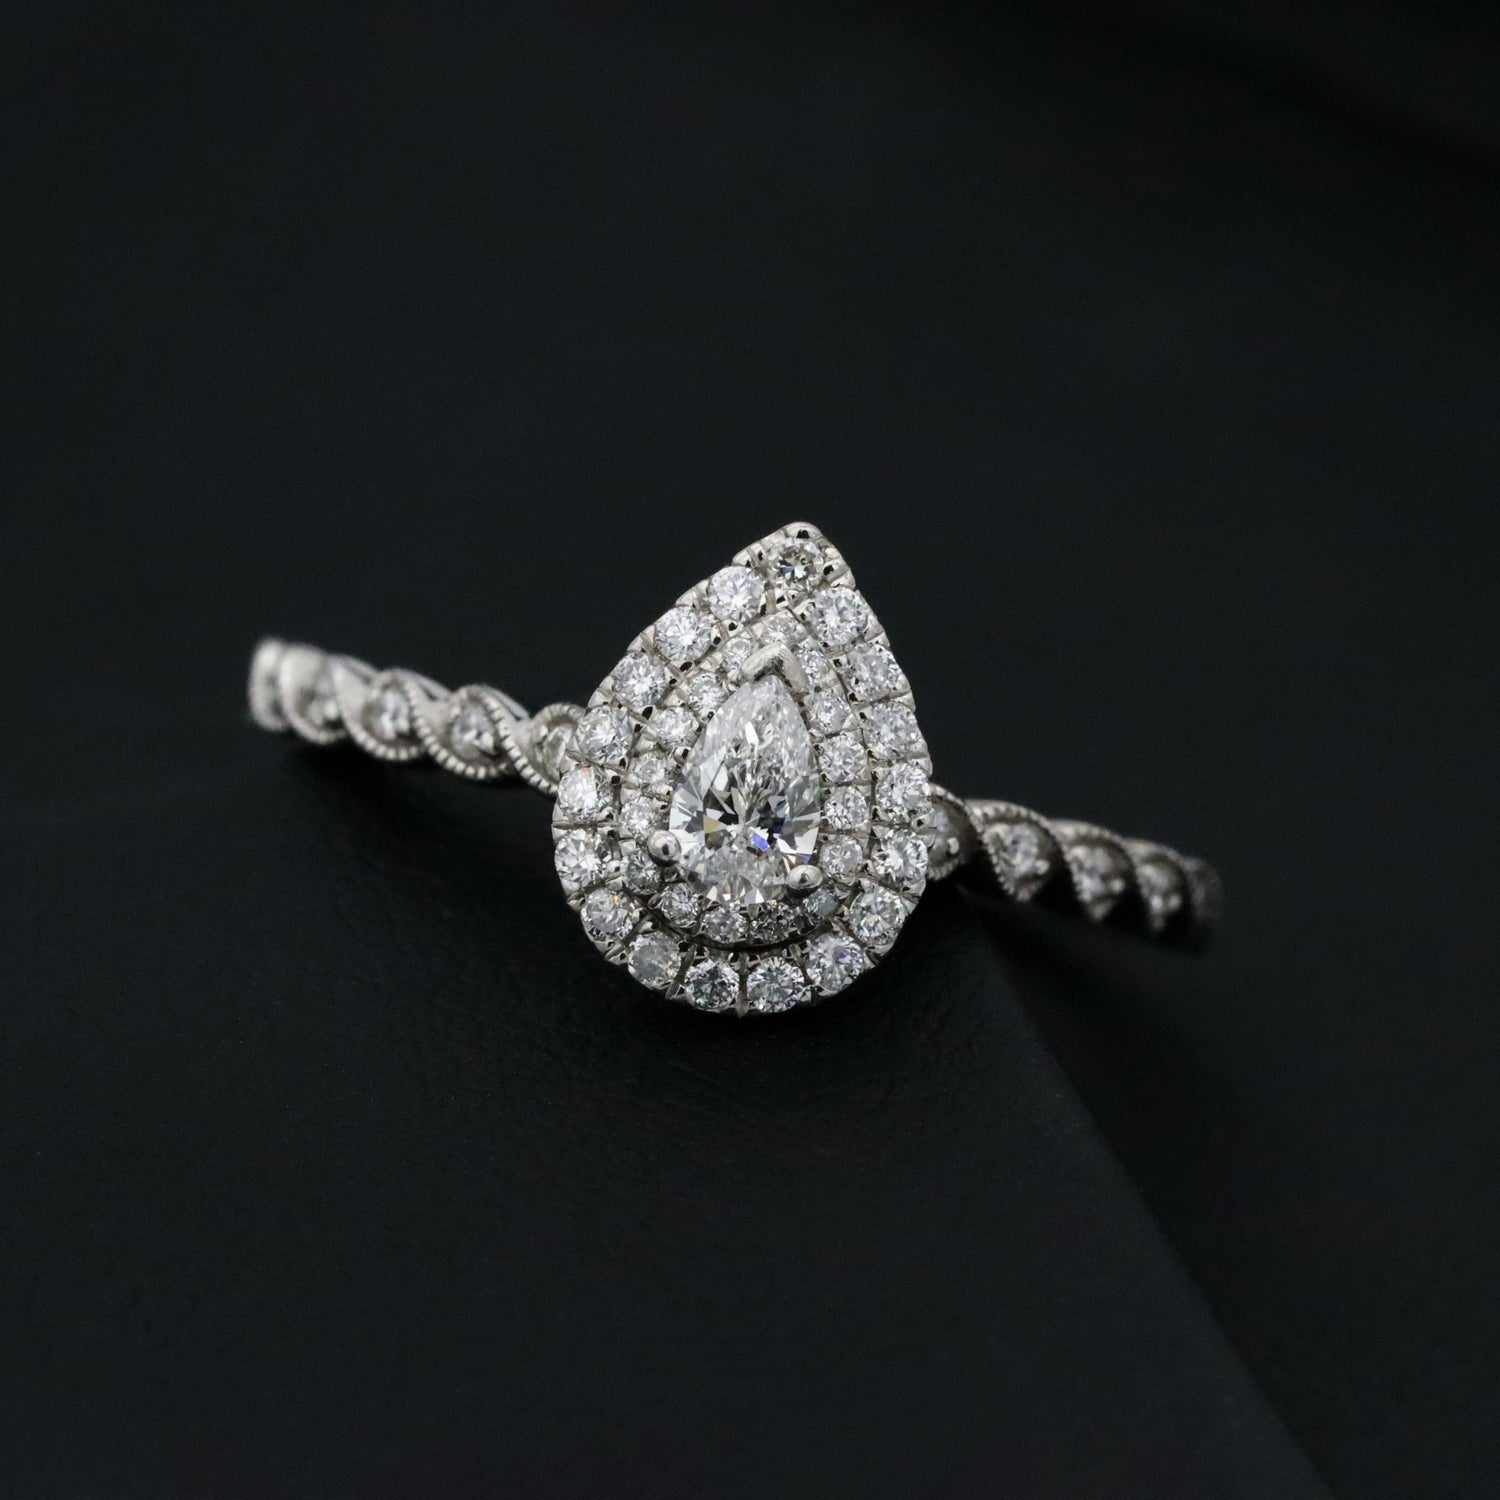 Pear shaped Diamond ring 